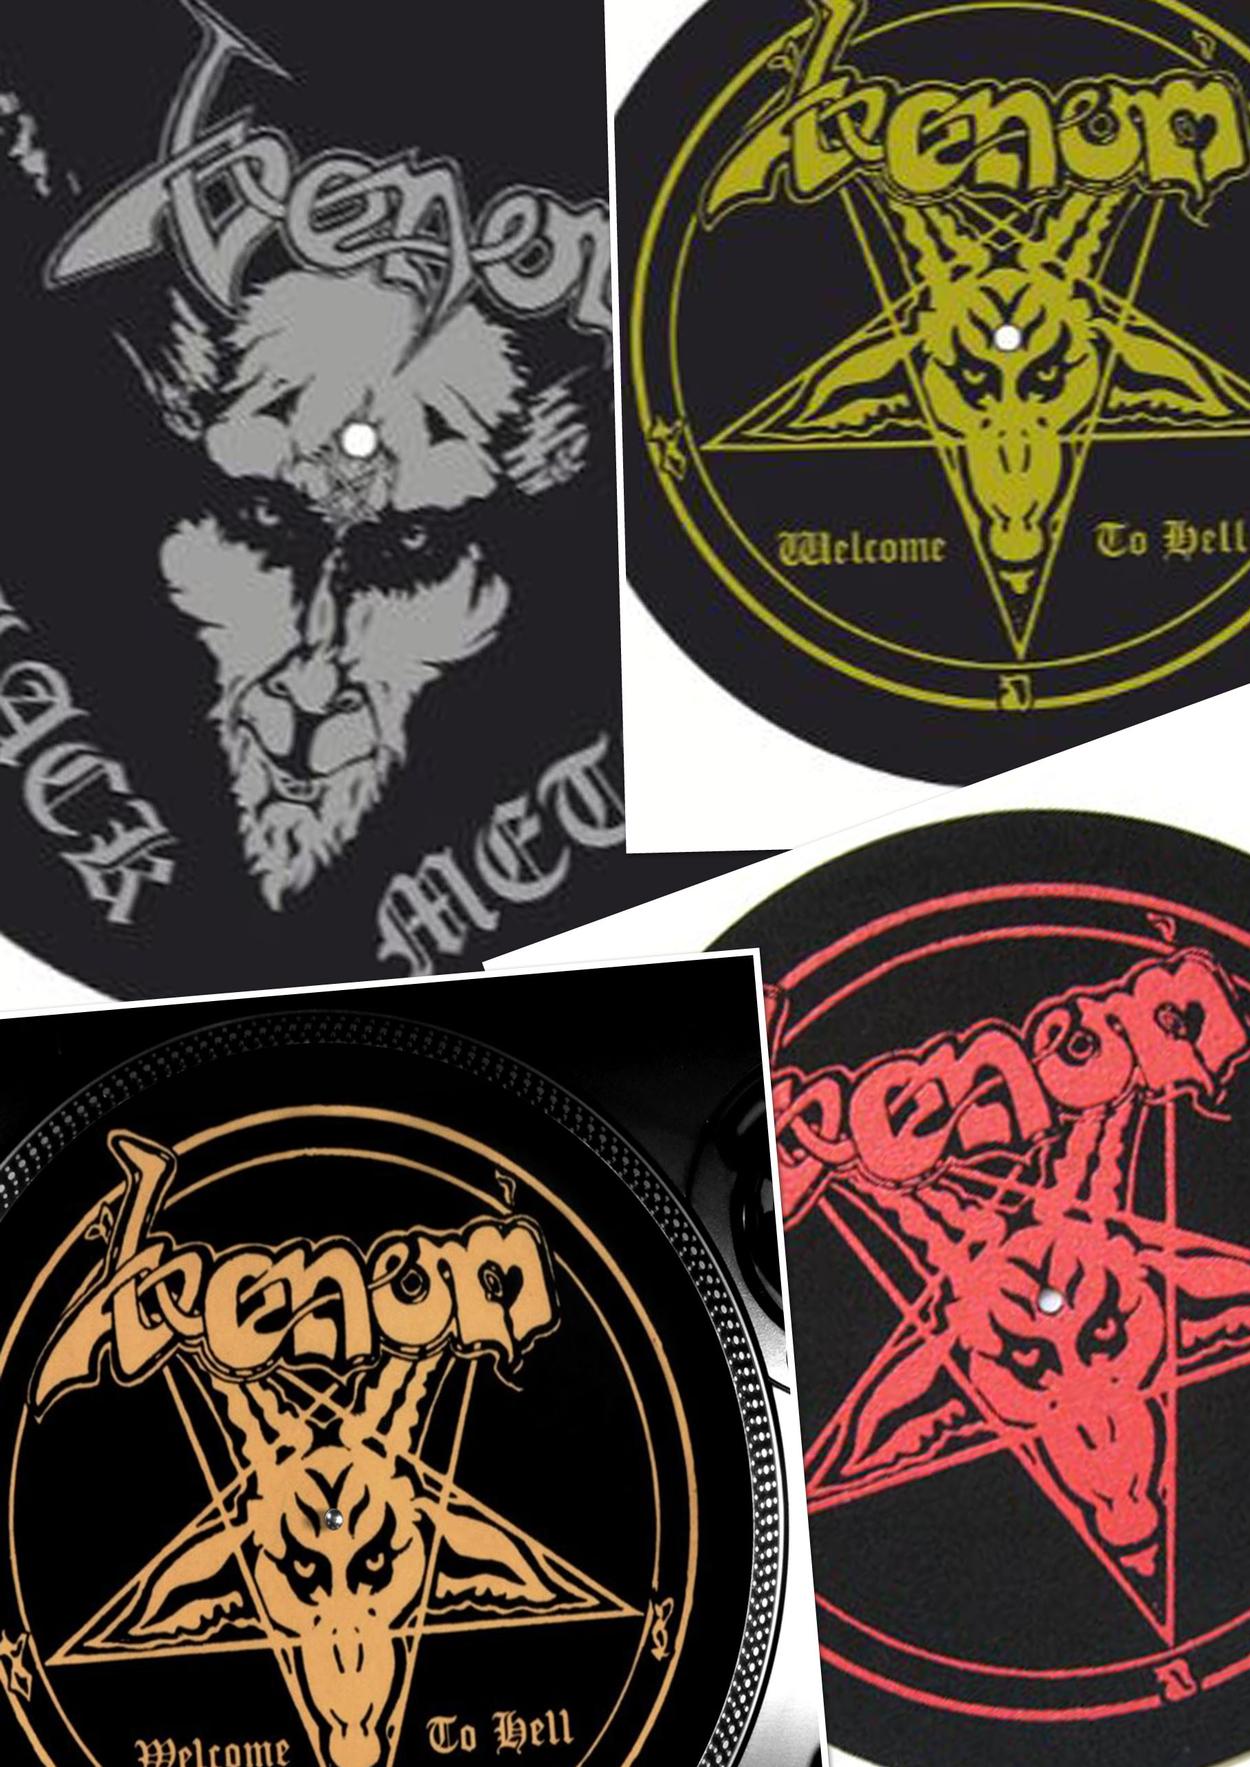 venom black metal collection homepage slipmats